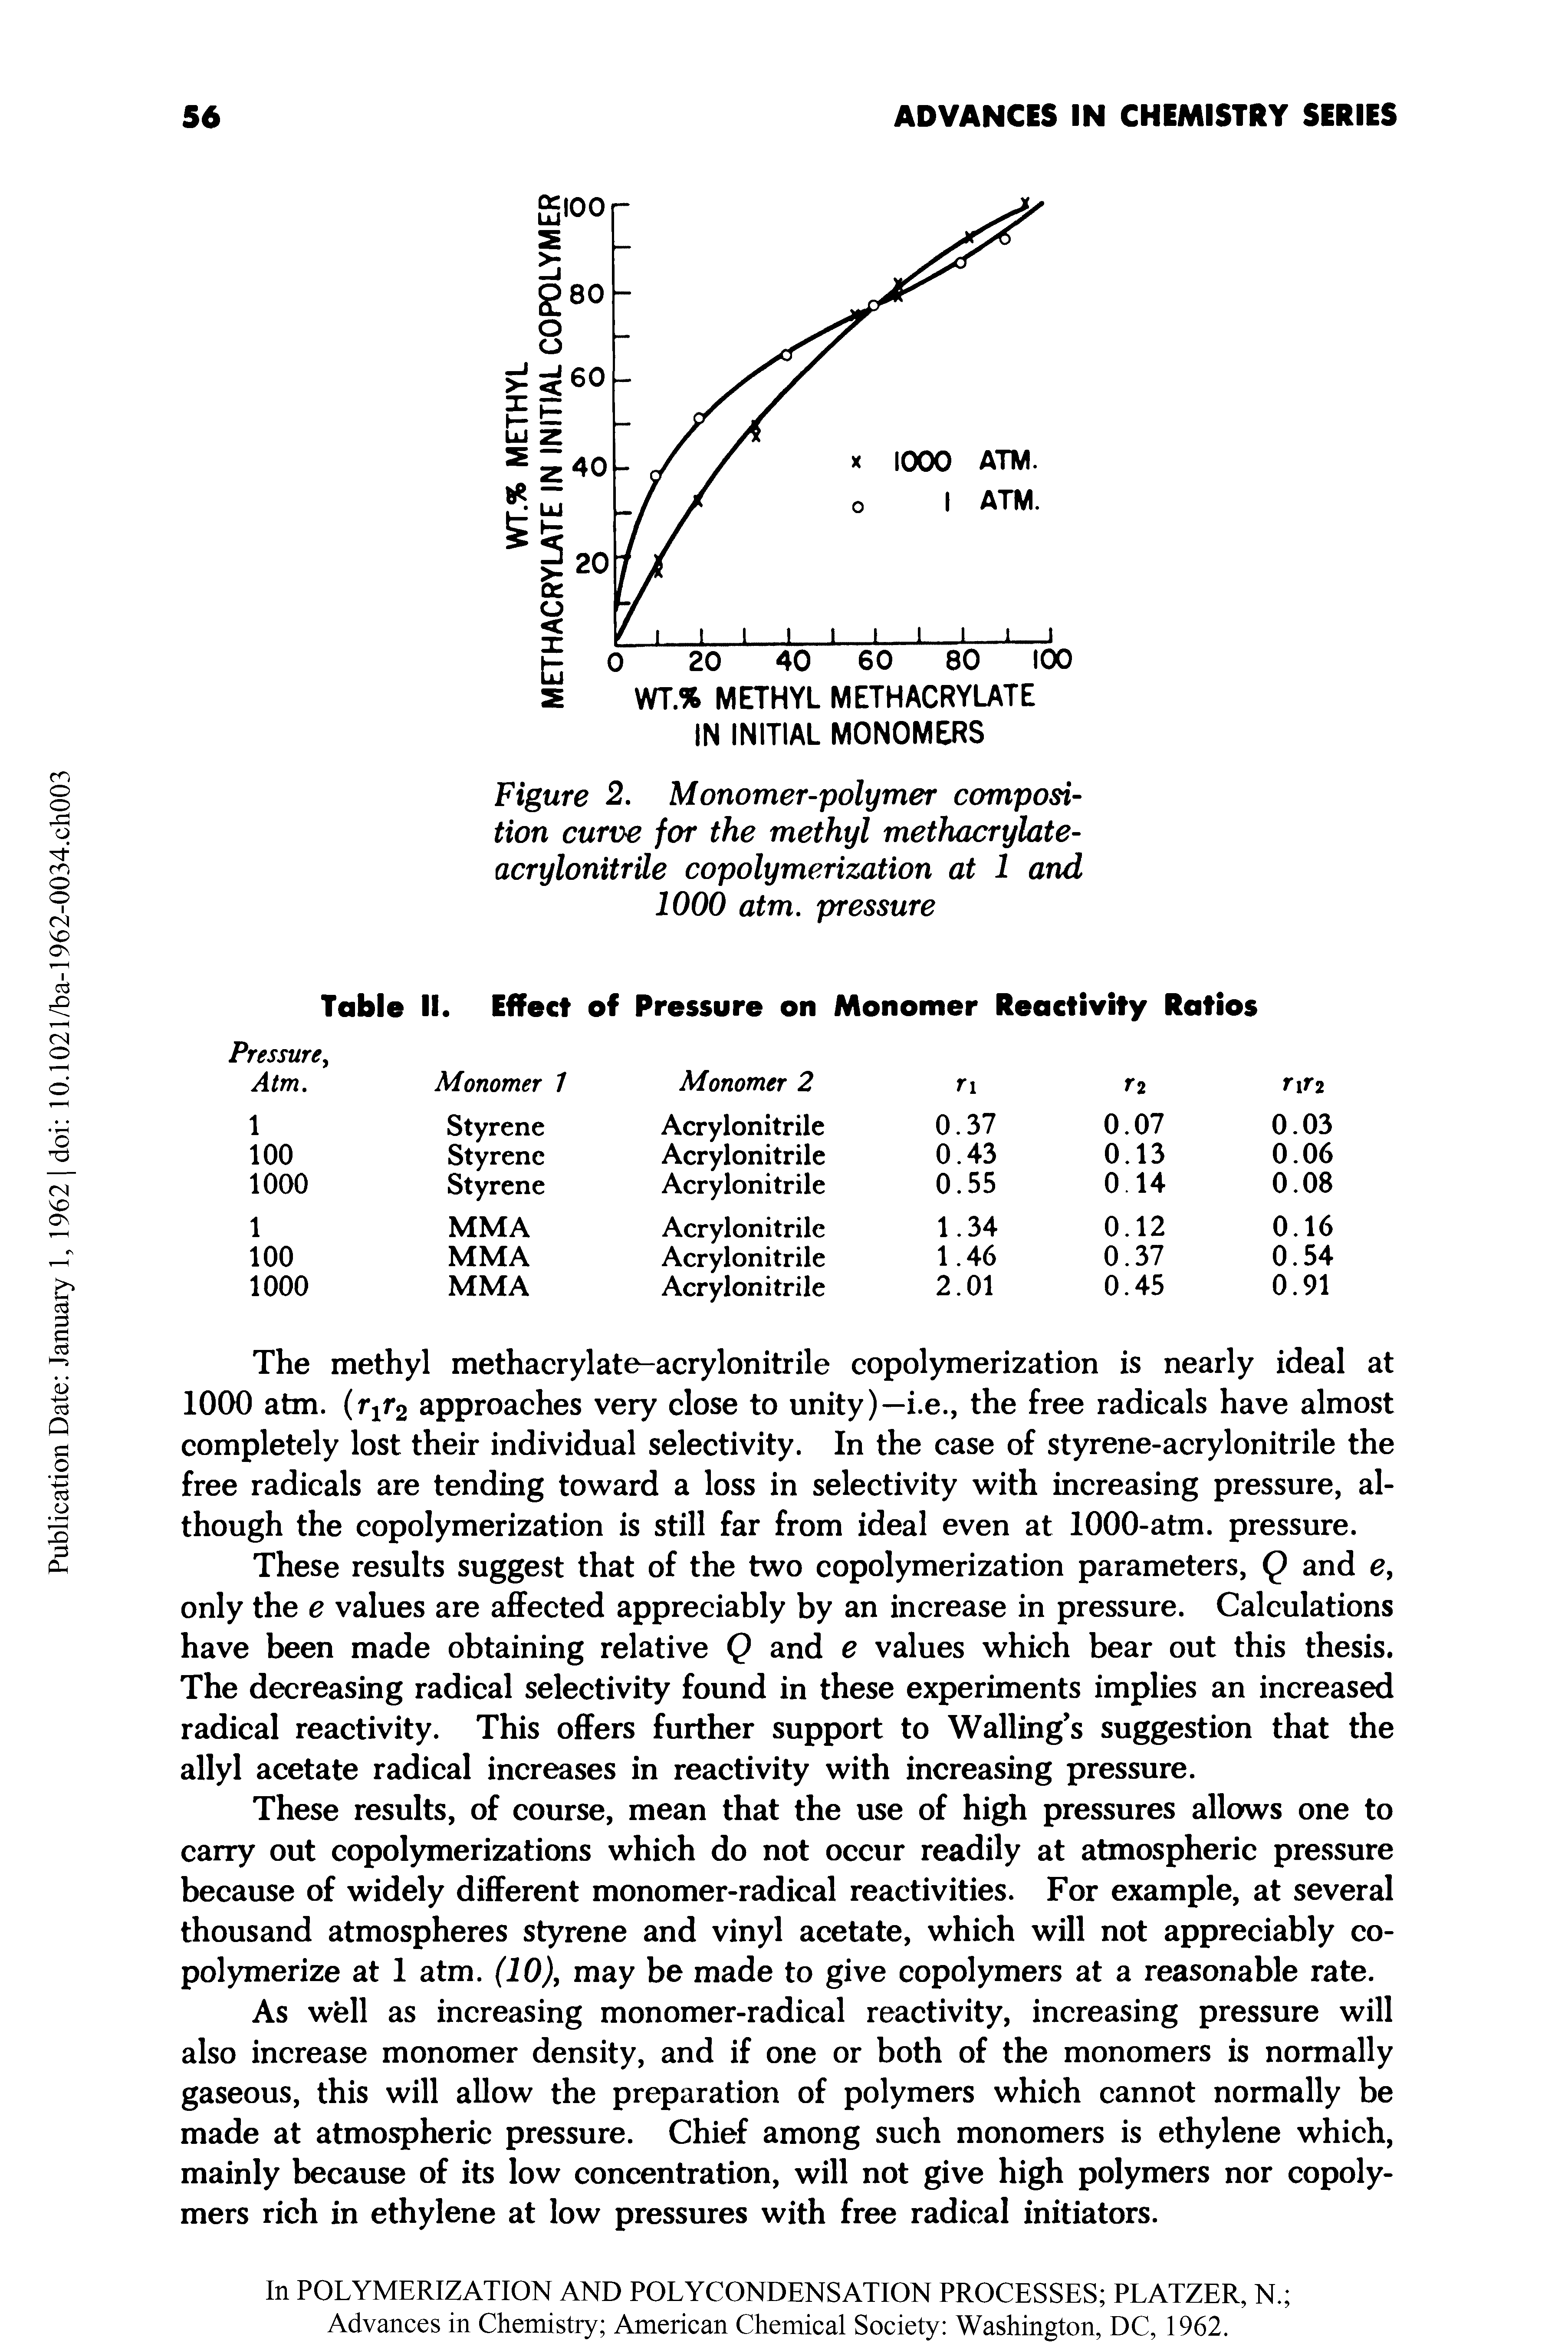 Table II. Effect of Pressure on Monomer Reactivity Ratios...